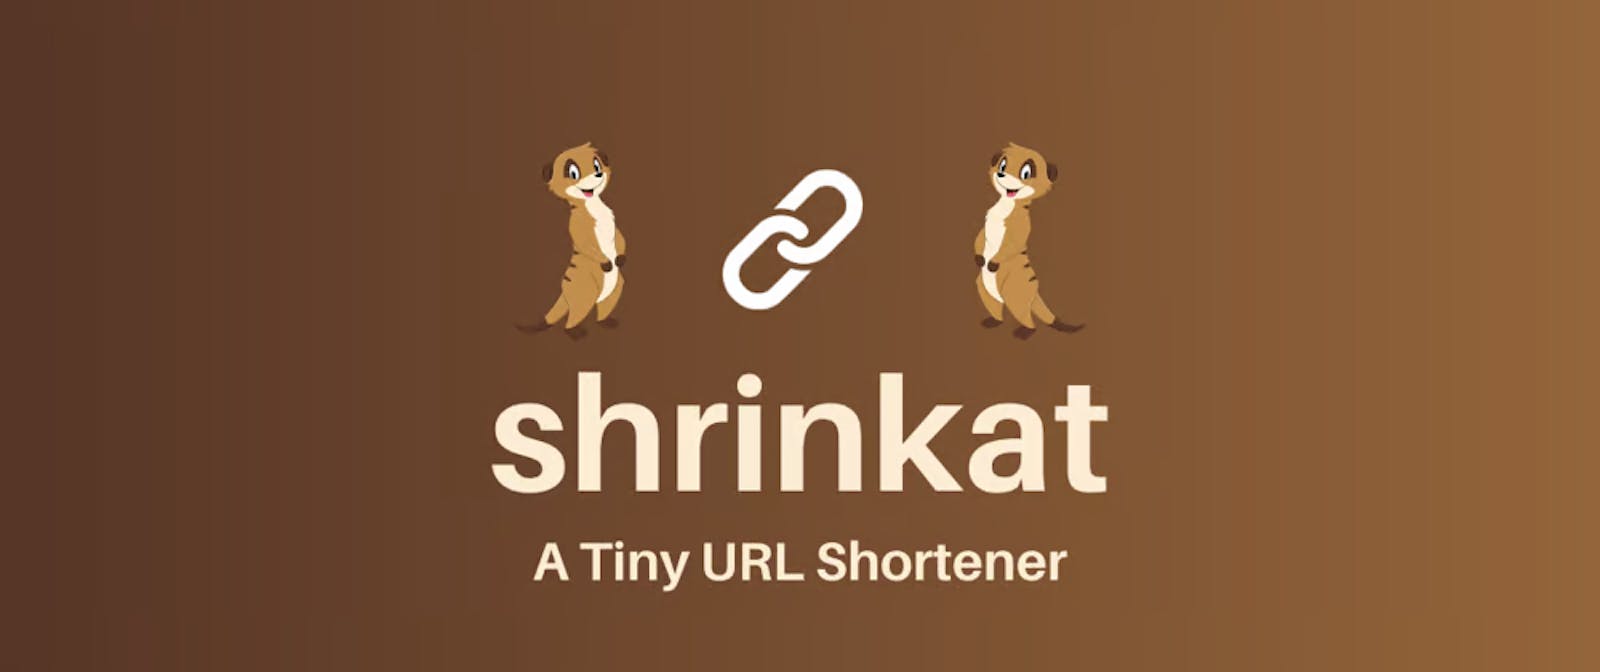 I Present To You - shrinkat - A Tiny URL Shortener